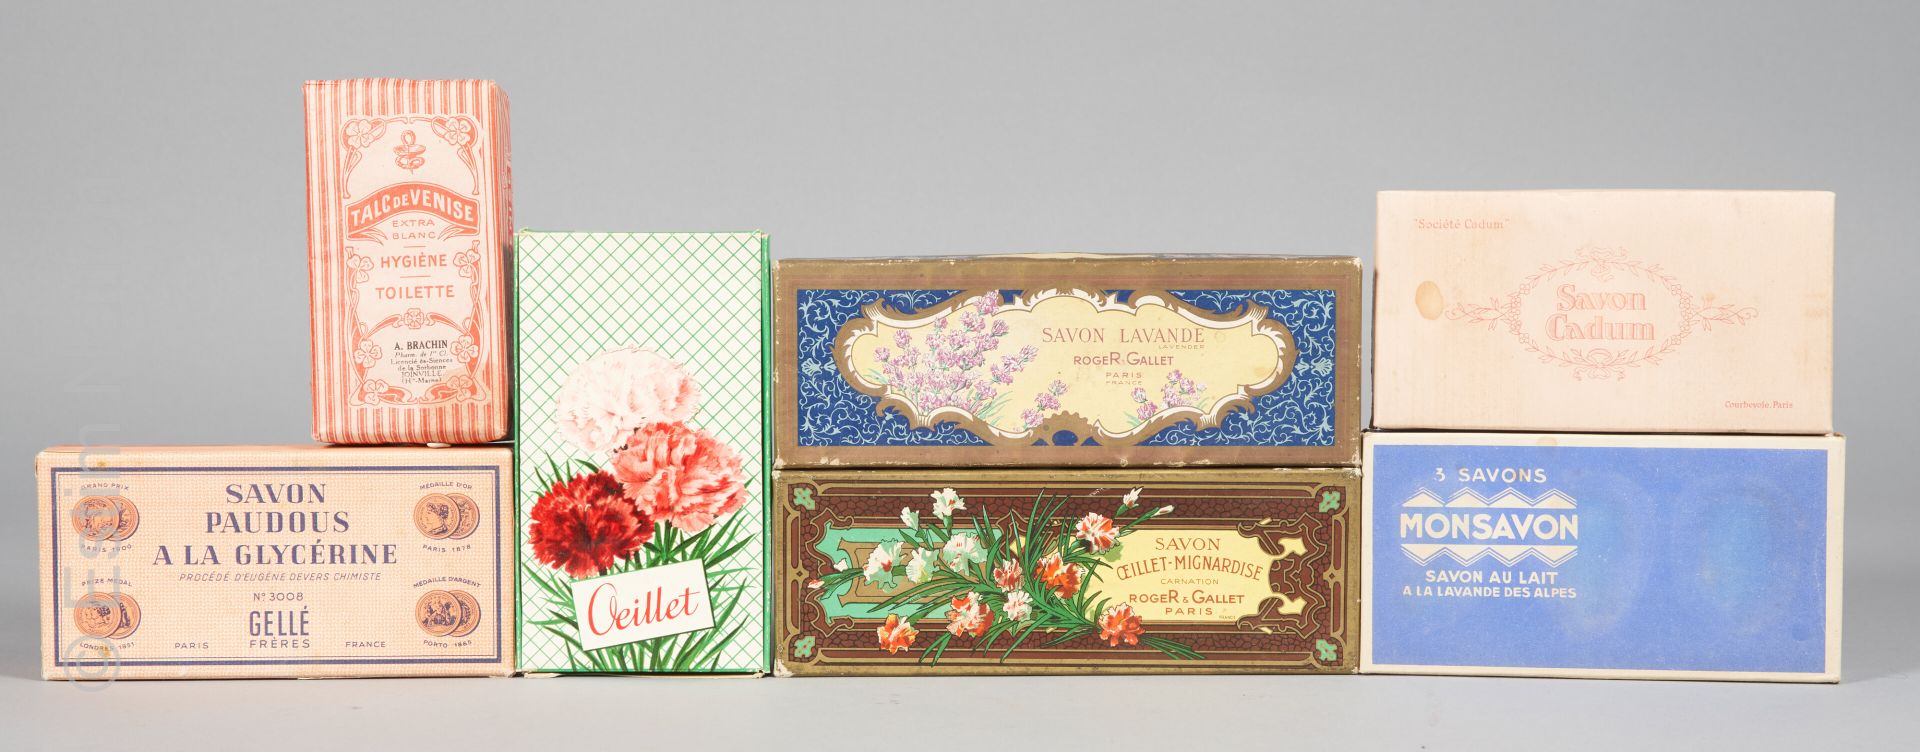 COSMETIQUES 重要的很多肥皂盒和旧肥皂盒，包括两个有标记的空肥皂盒。



- Oeillet, Donge花香皂

- Monsavon, 阿尔卑斯&hellip;